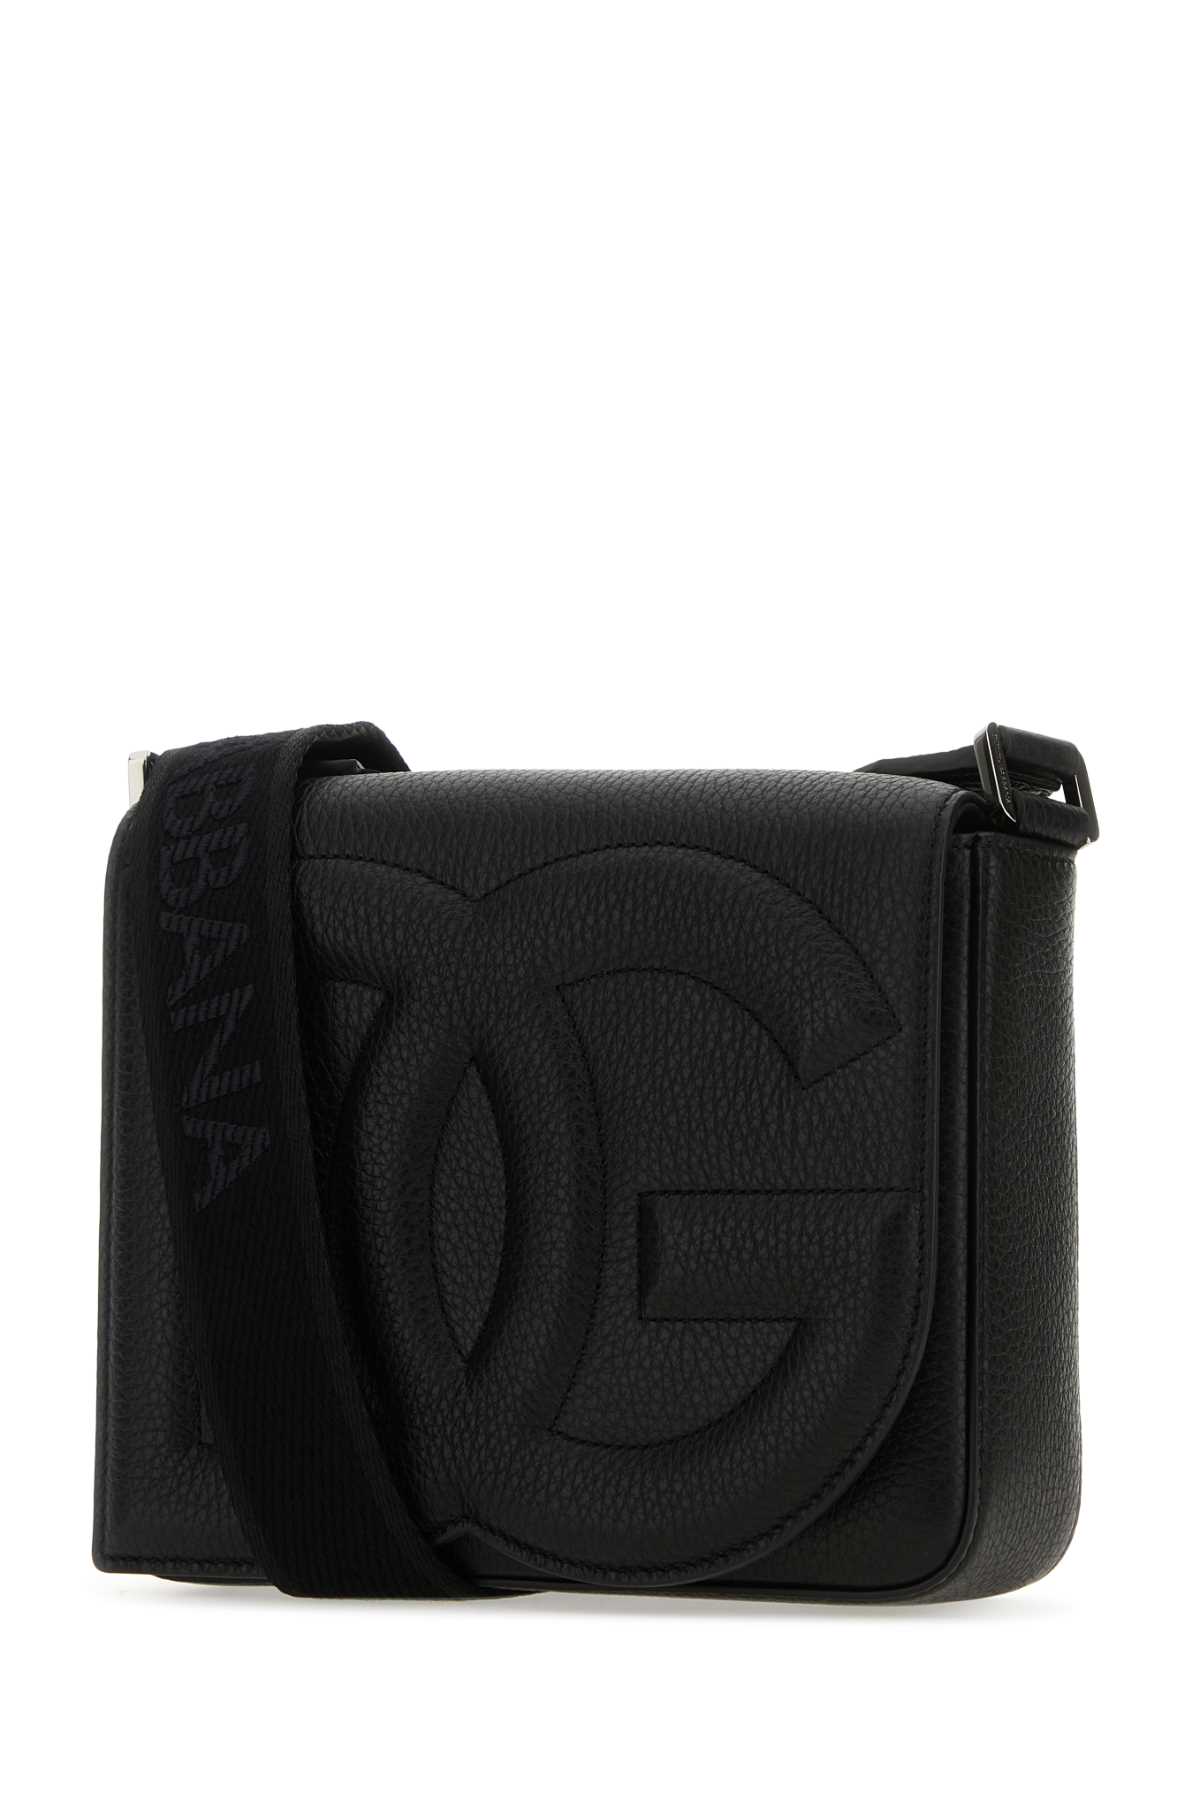 Dolce & Gabbana Black Leather Medium Dg Logo Bag Crossbody Bag